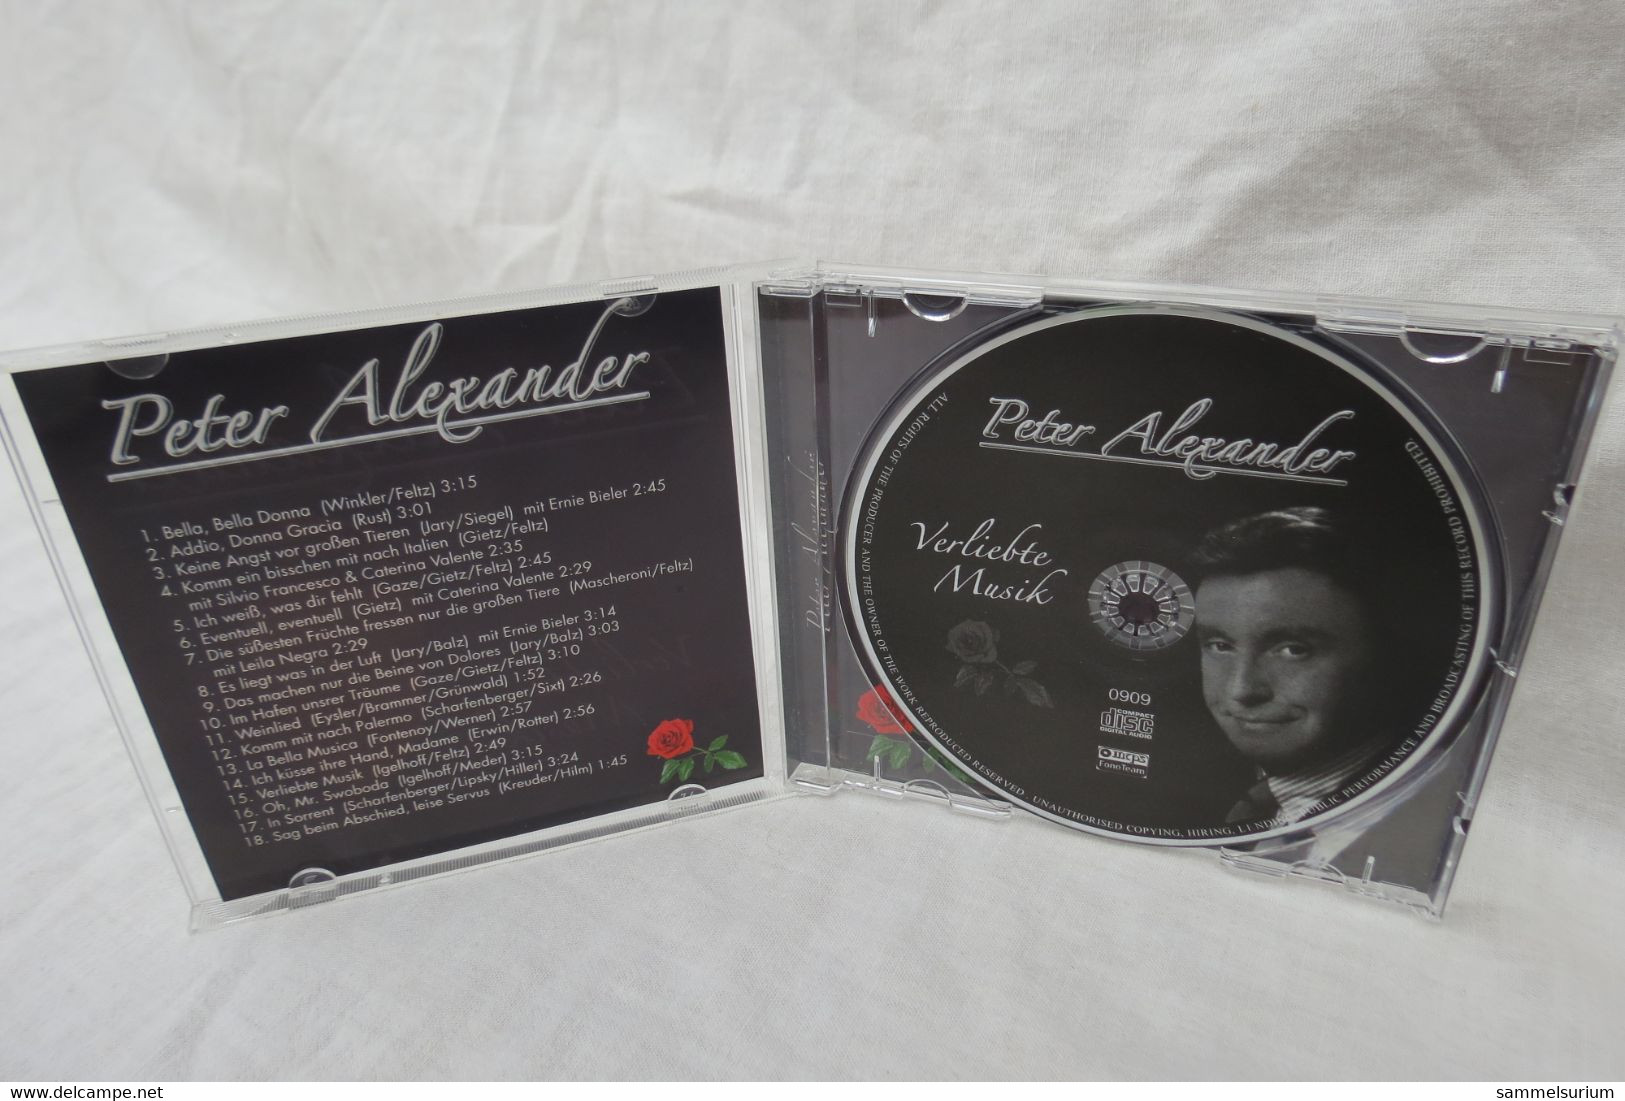 CD "Peter Alexander" Verliebte Musik - Other - German Music